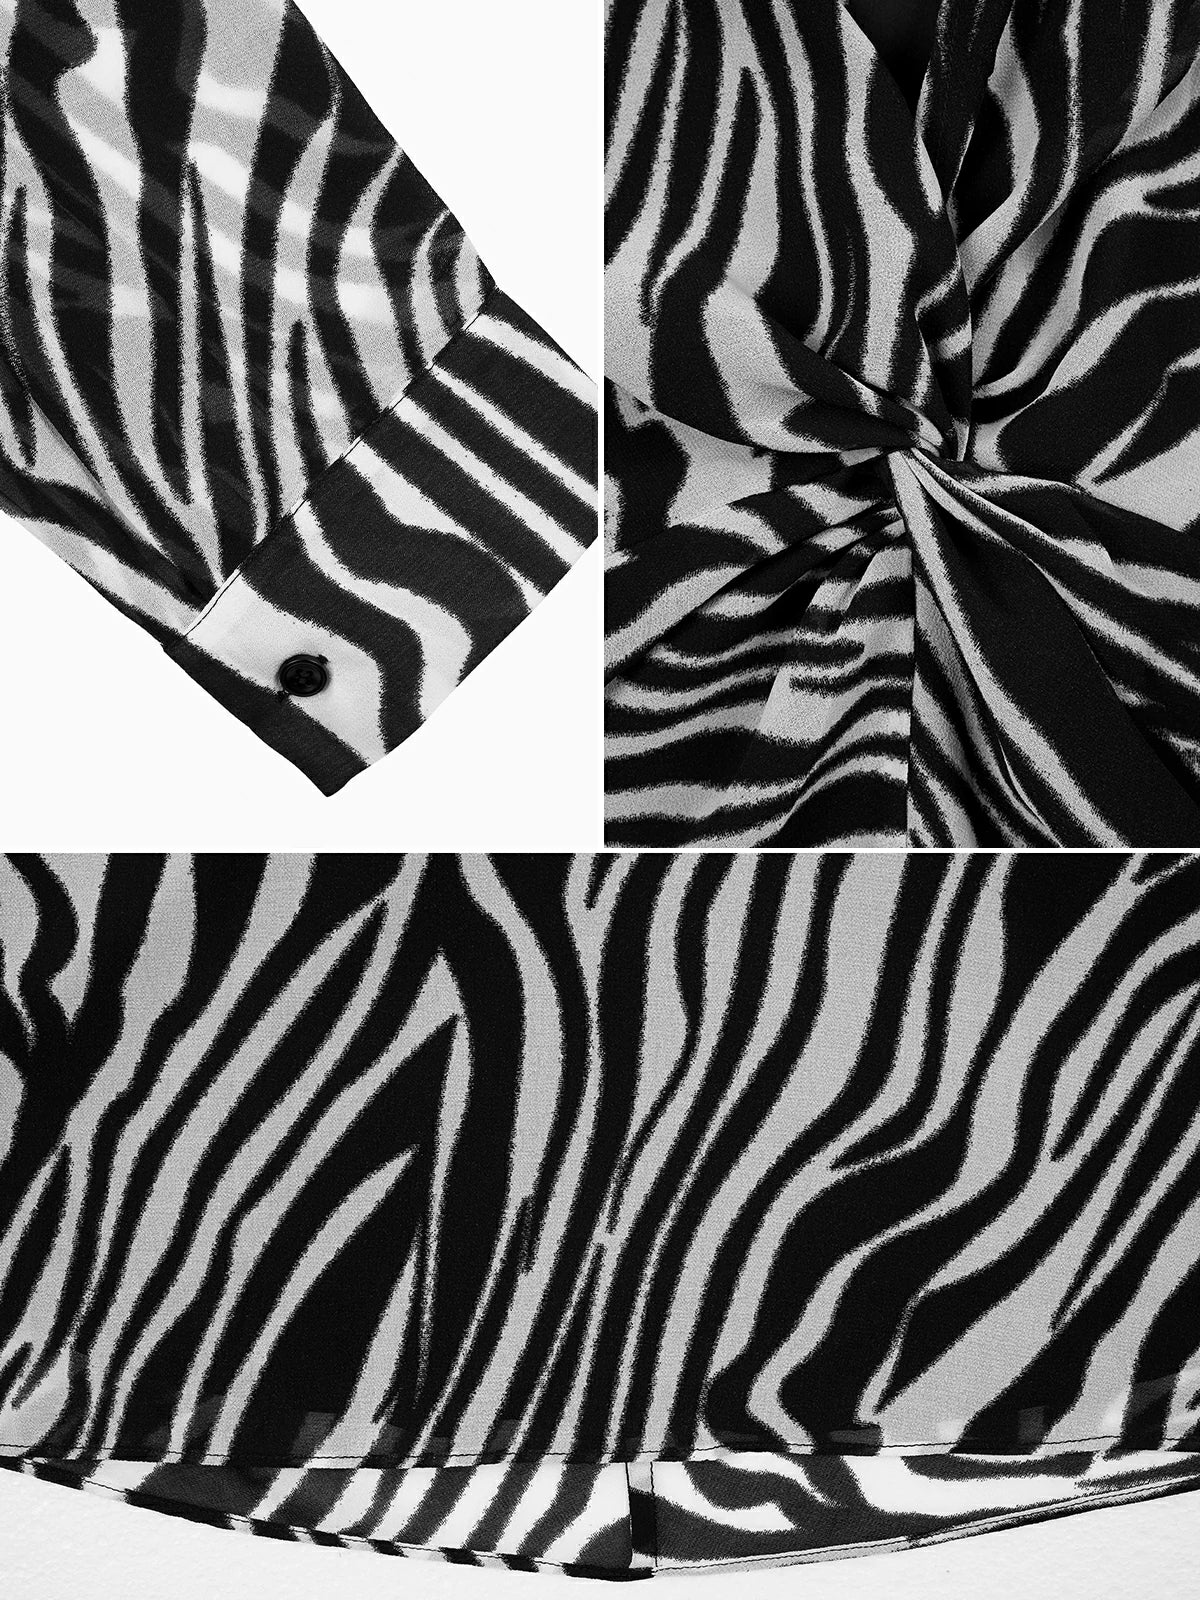 Zebra Print Relaxed Long Sleeve Shirt